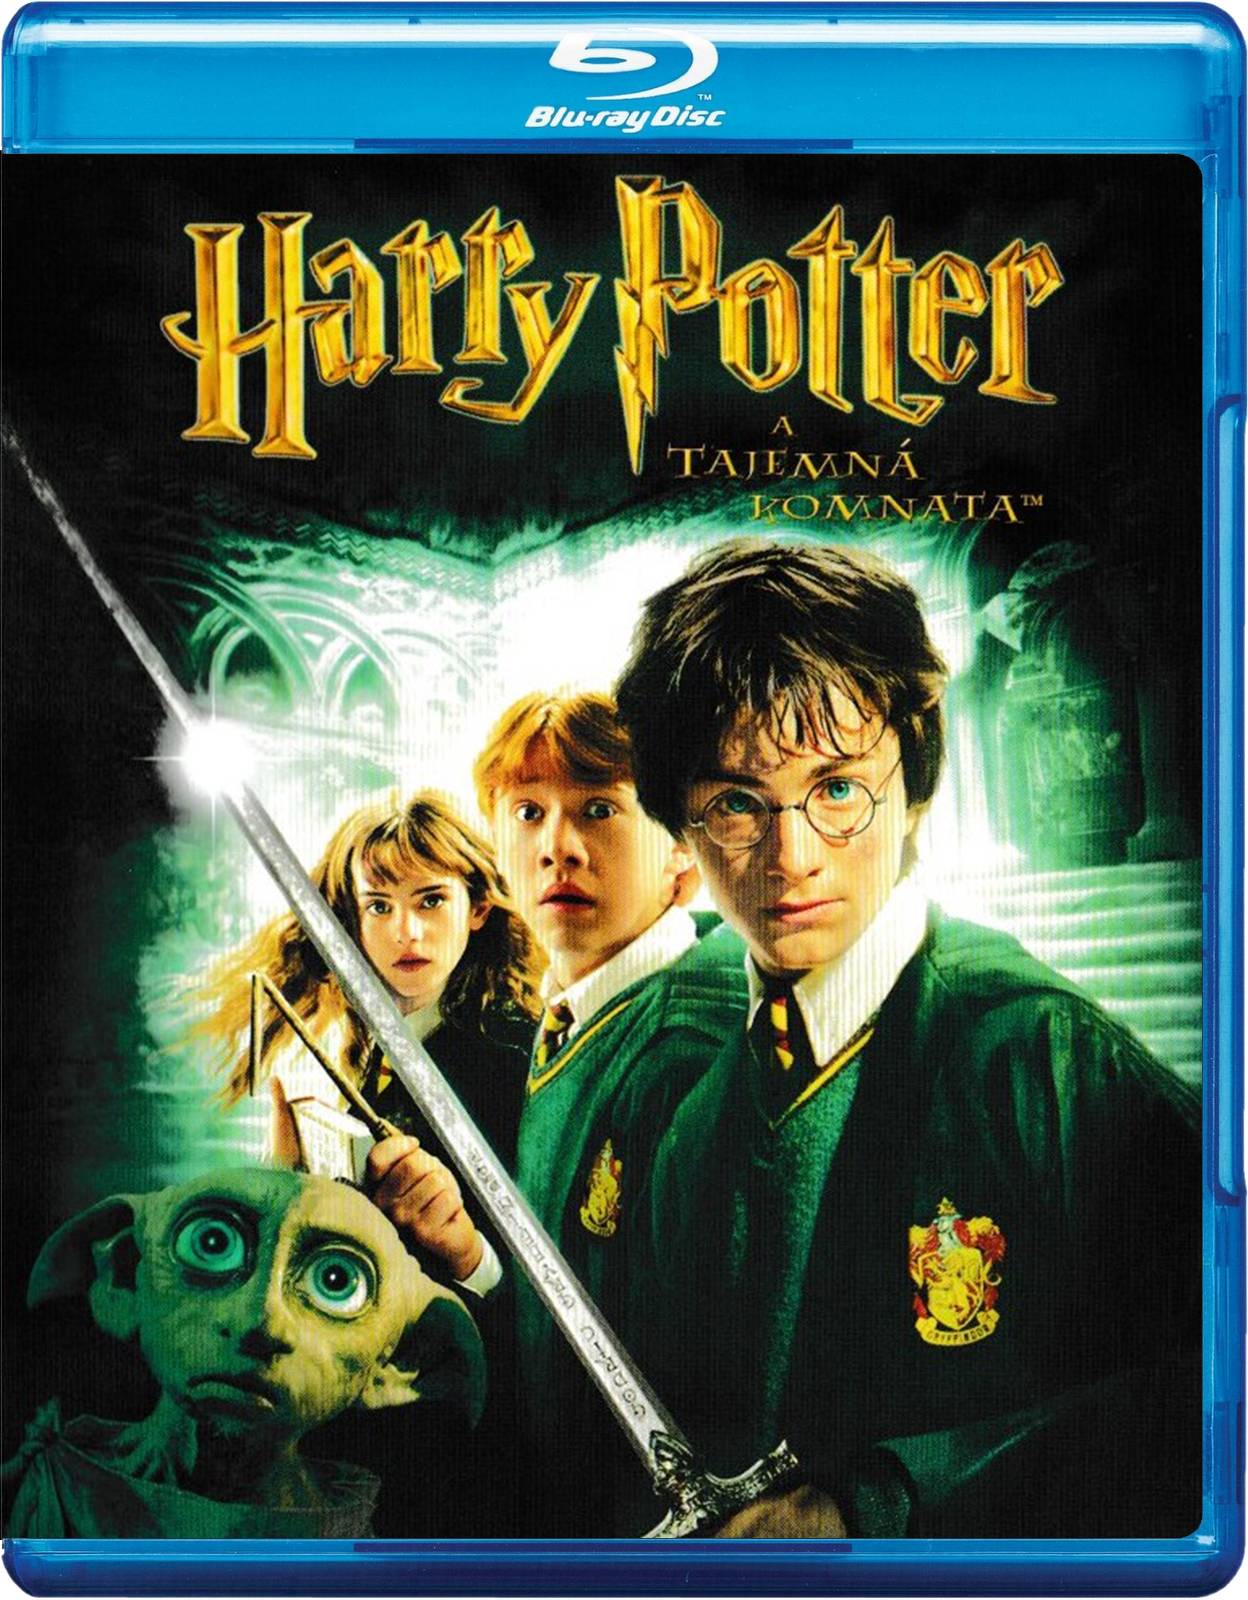 Stiahni si HD Filmy Harry Potter a Tajemna komnata/ Harry Potter and the Chamber of Secrets (2002)(CZ/EN) [1080pHD] = CSFD 77%